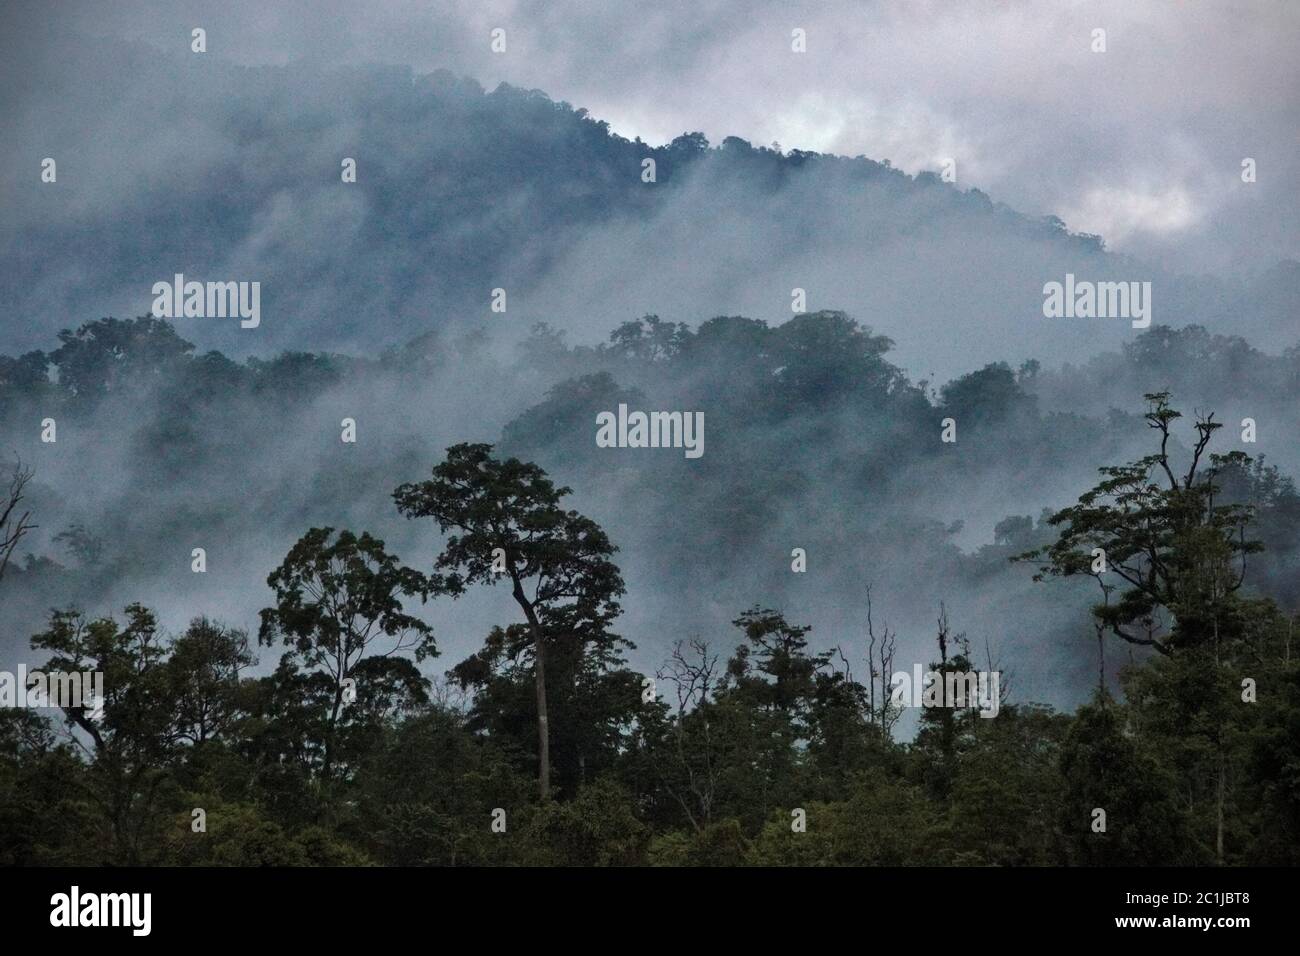 Misty, tropical rainforest of Sulawesi, Indonesia. Stock Photo